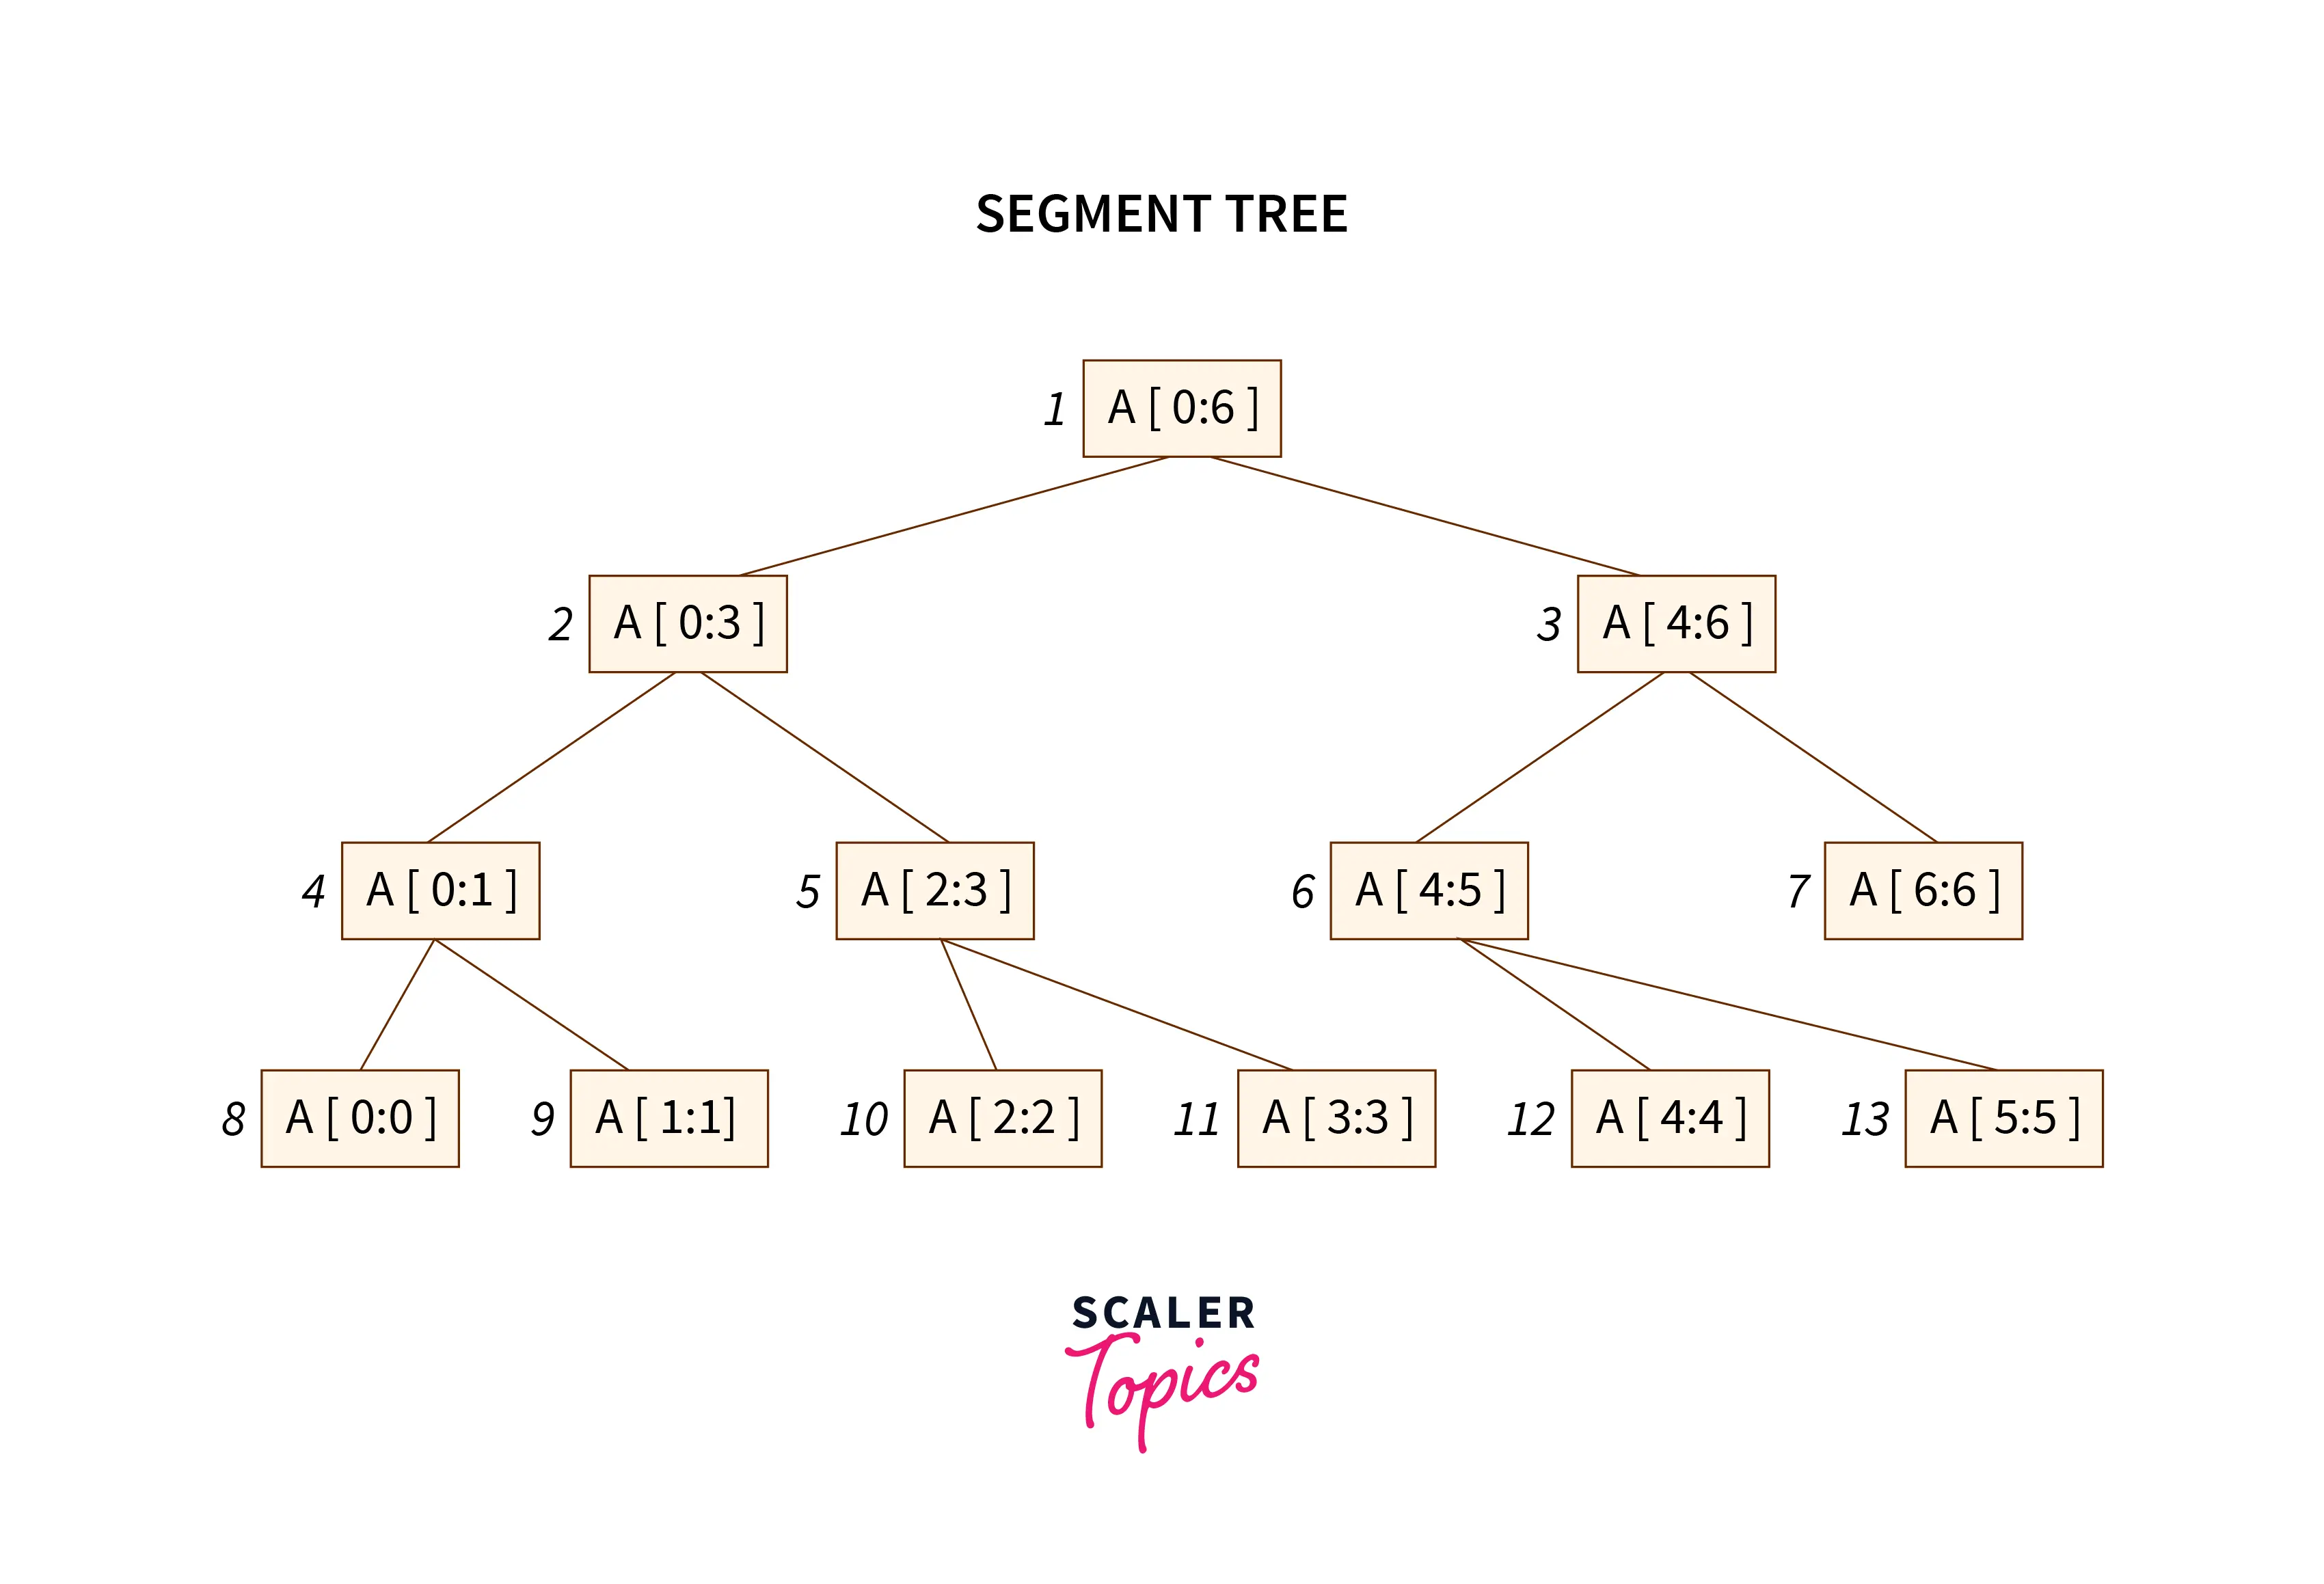 The Segment Tree